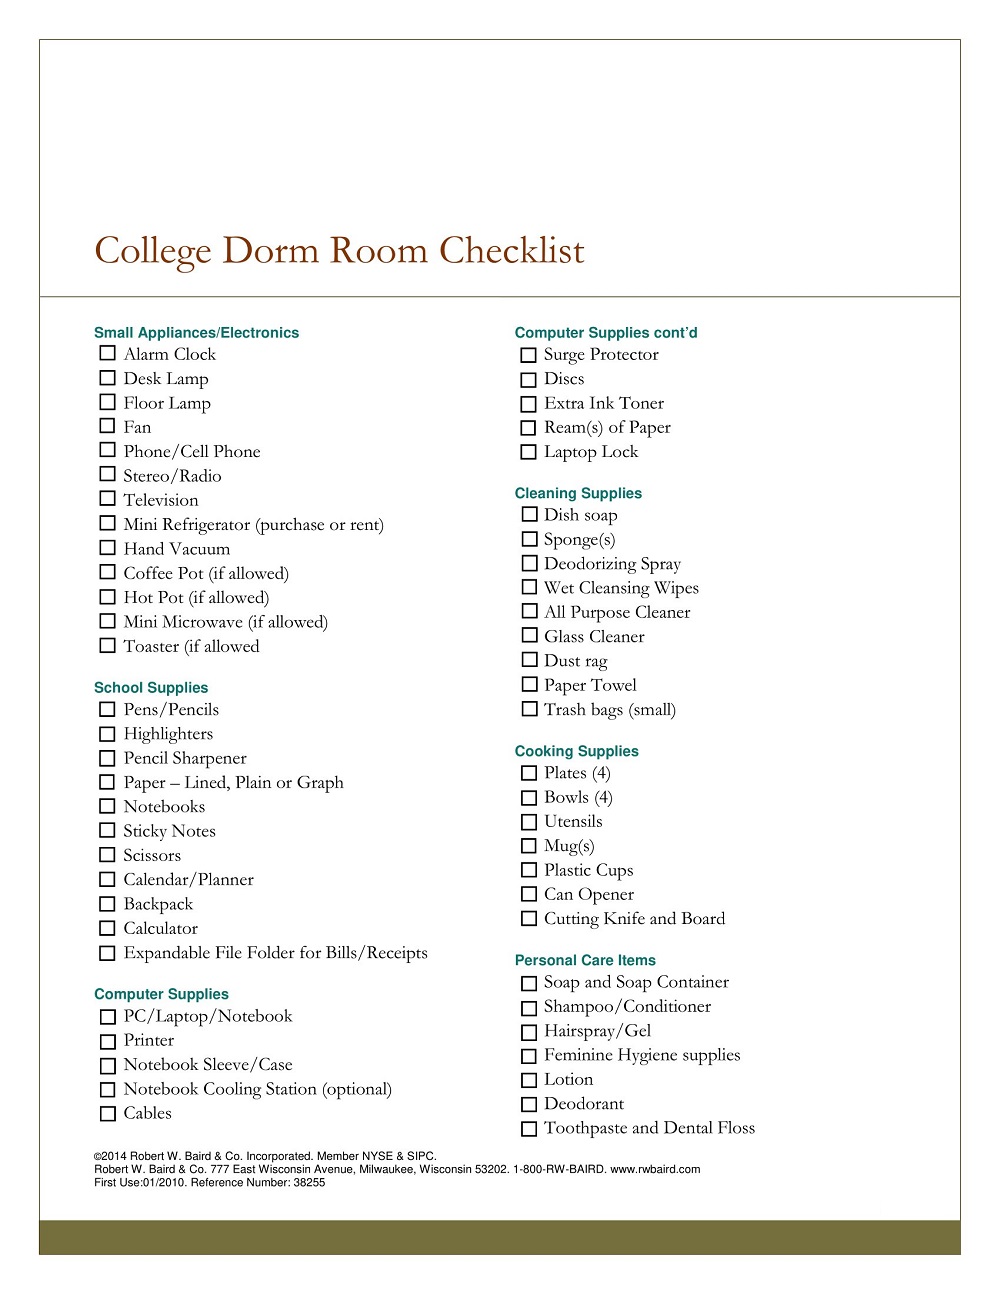 College Dorm Room Checklist